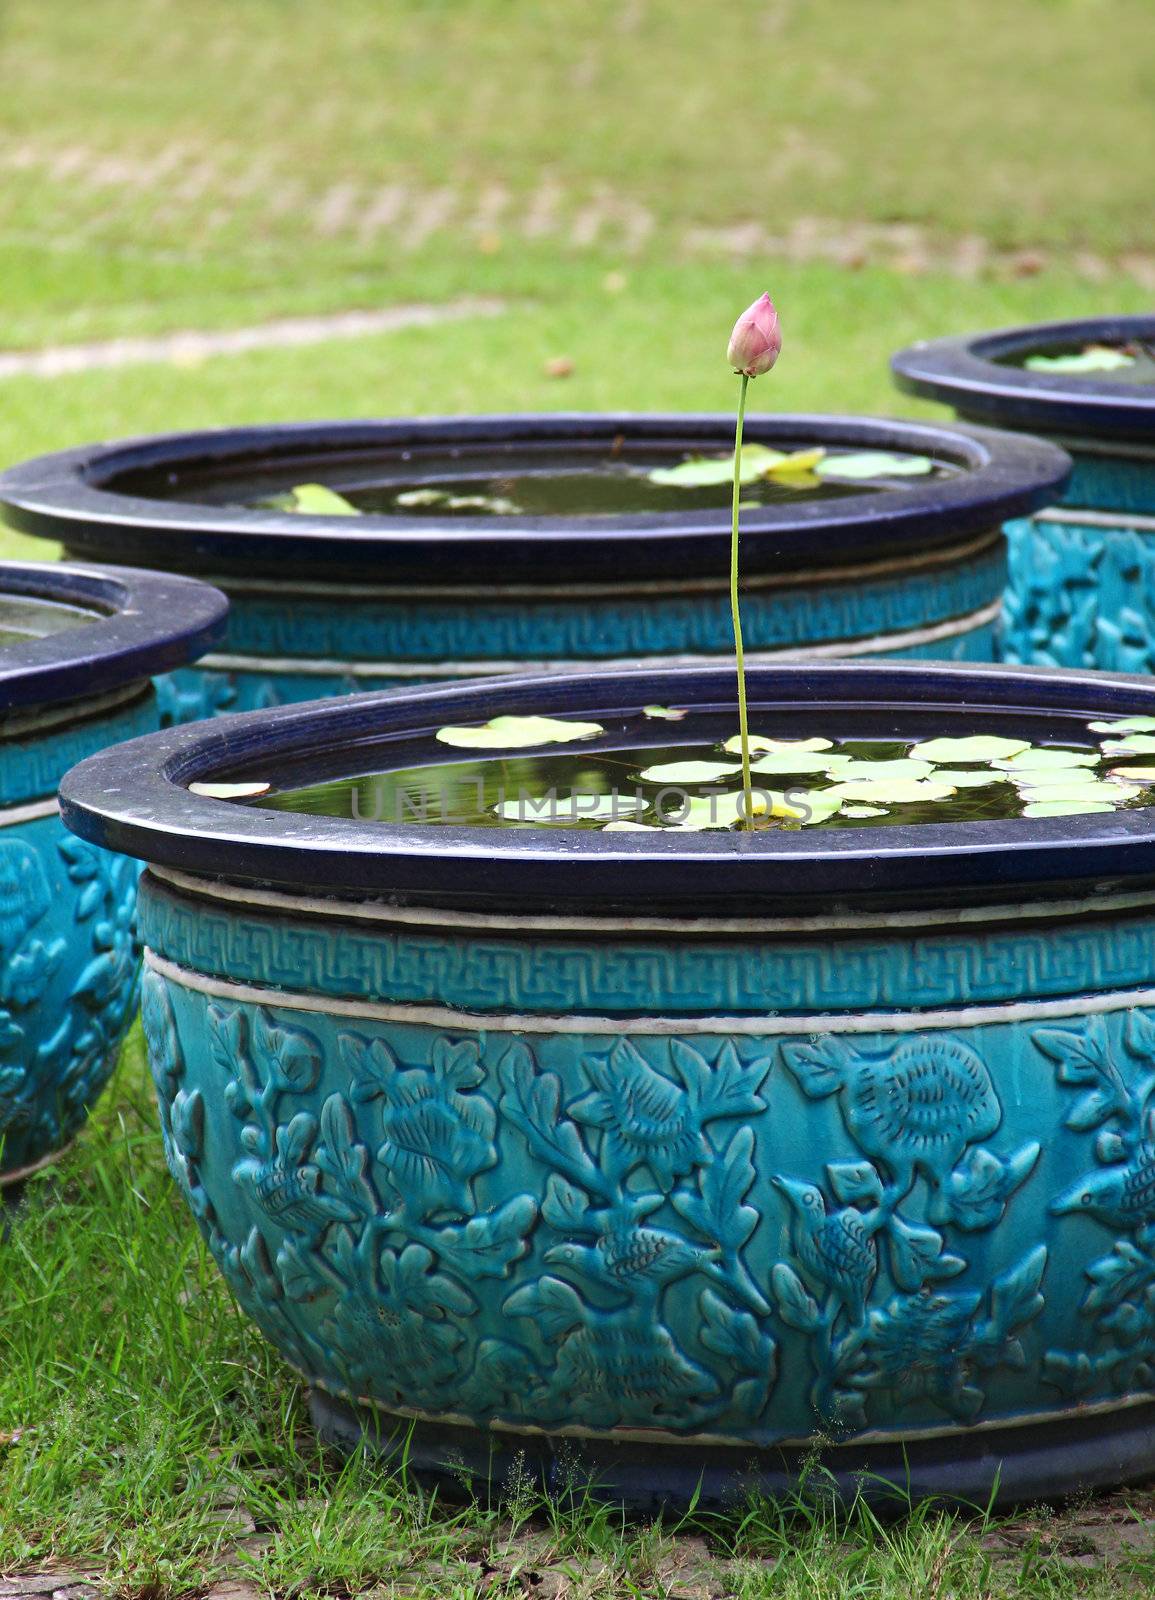 Ornamental pot of lotus in a garden